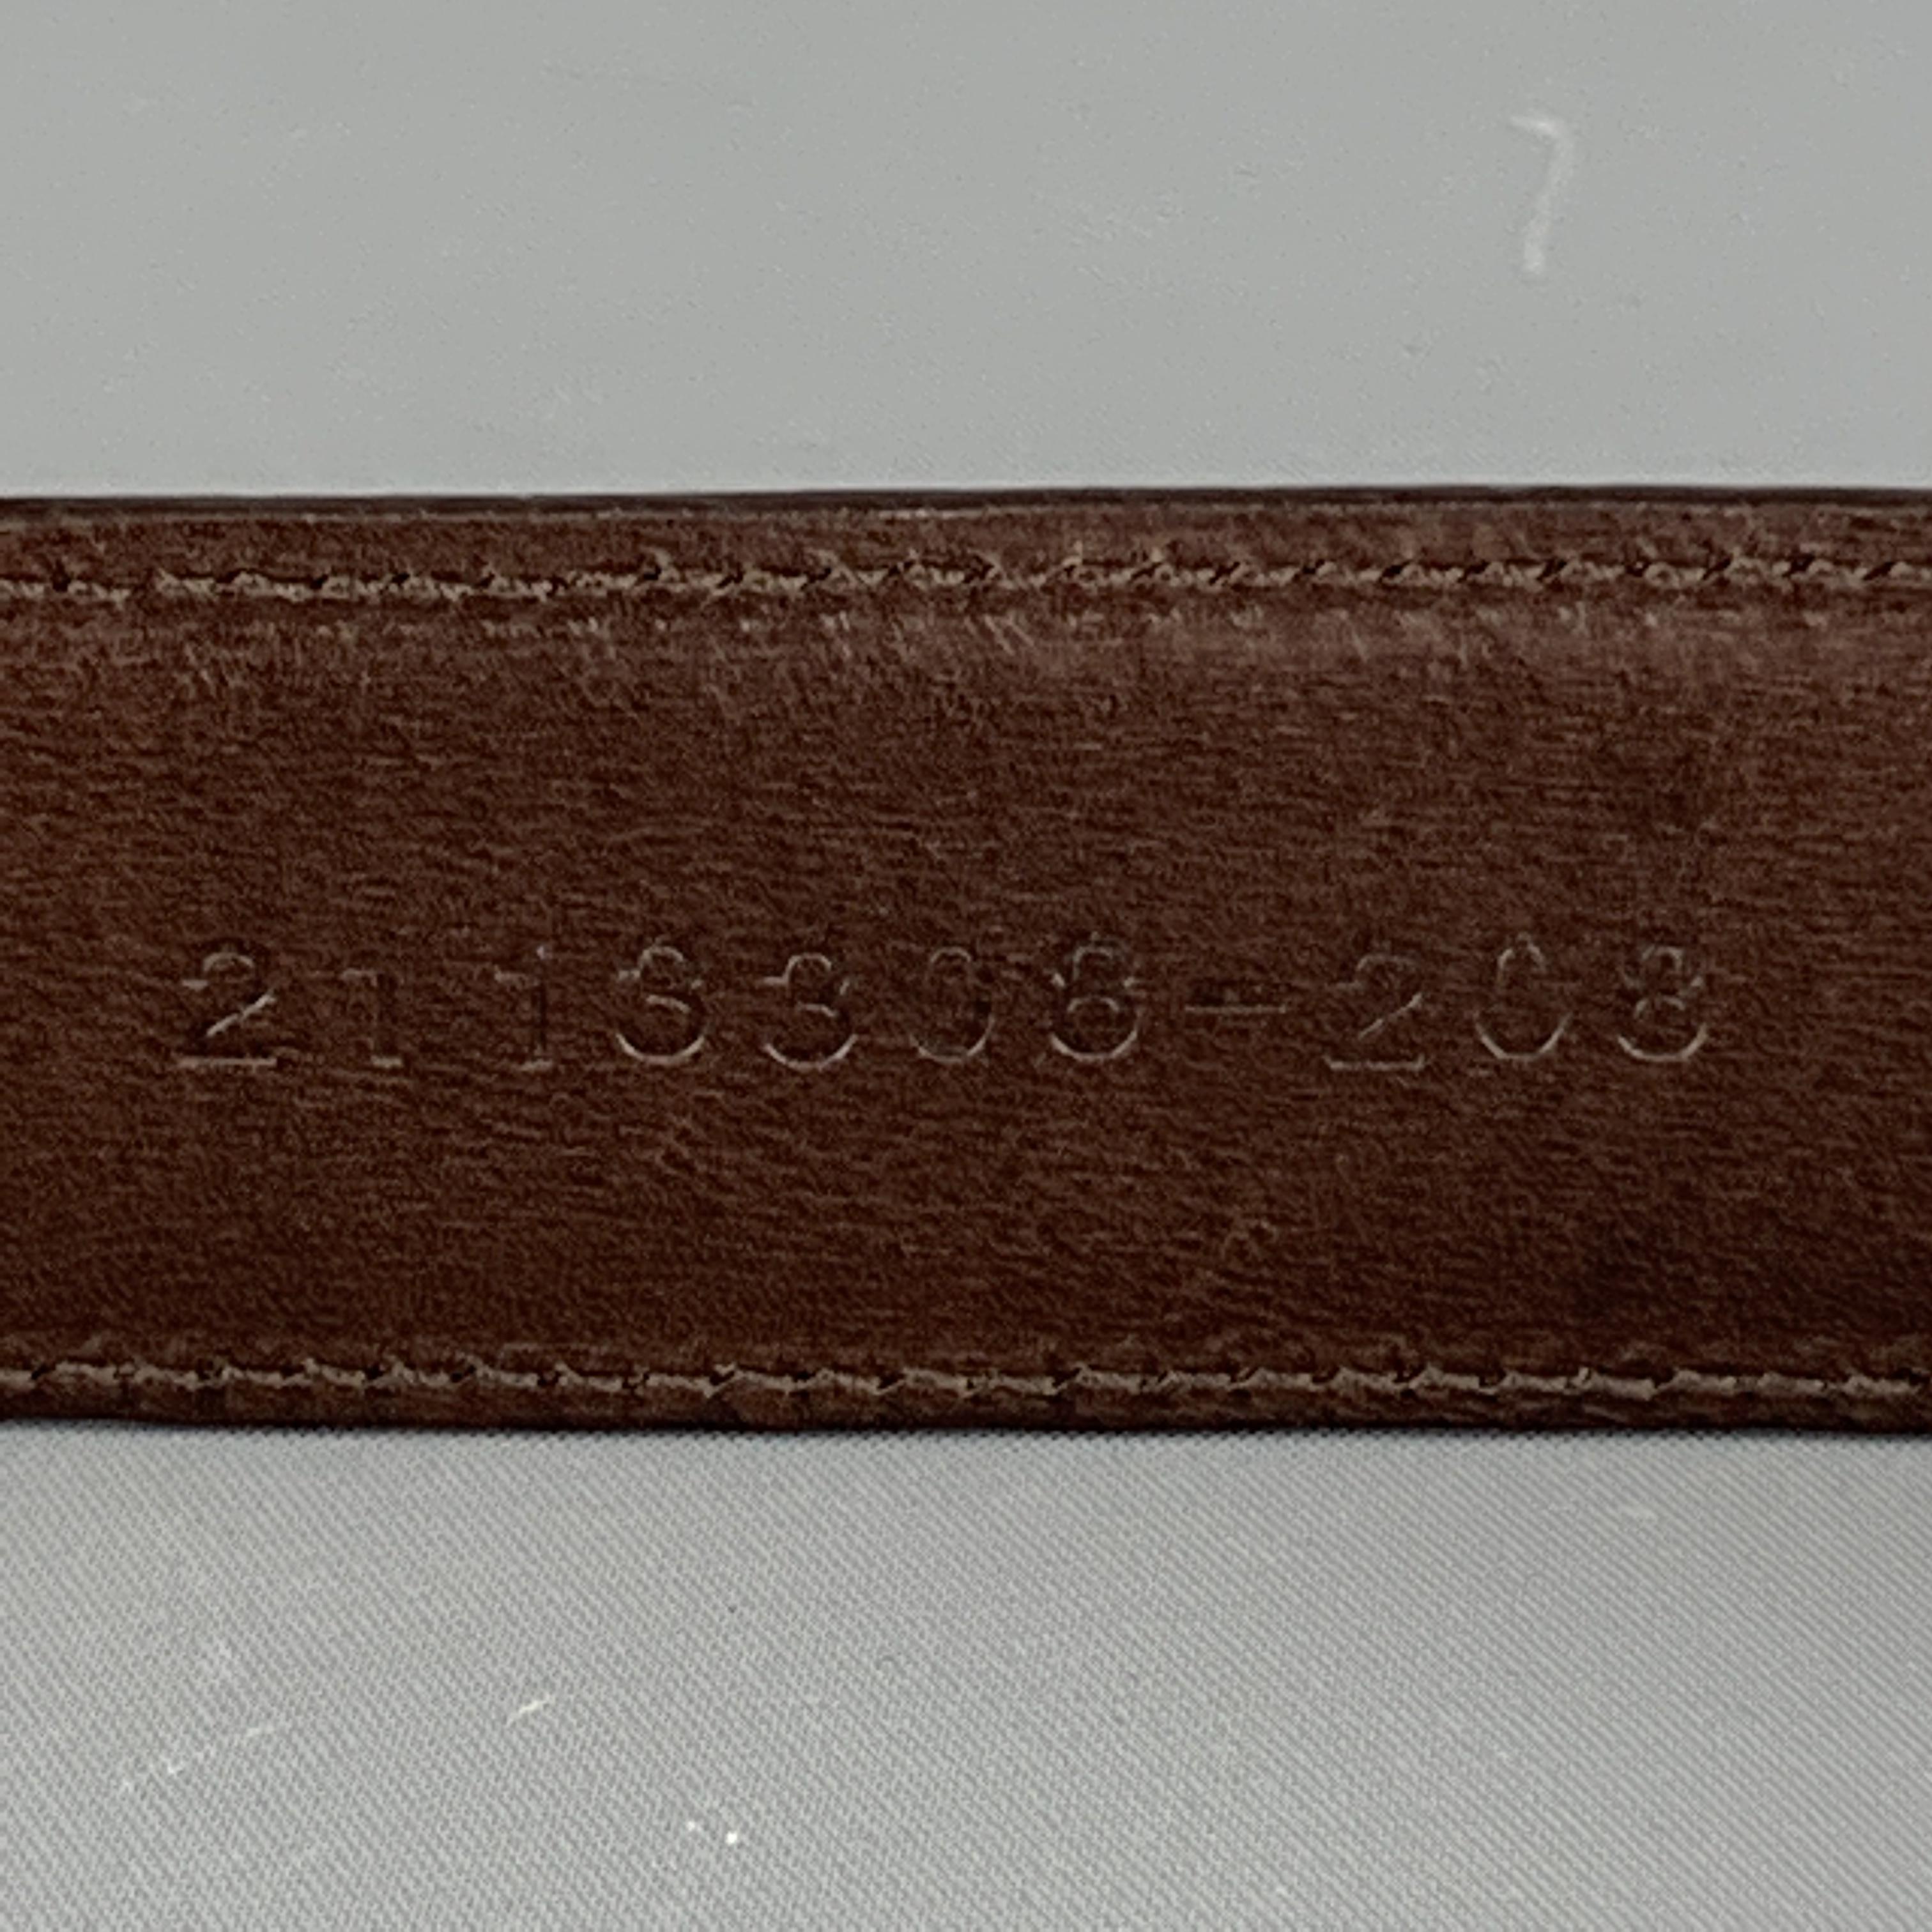 RALPH LAUREN Solid Size 32 Brown Leather Belt 3